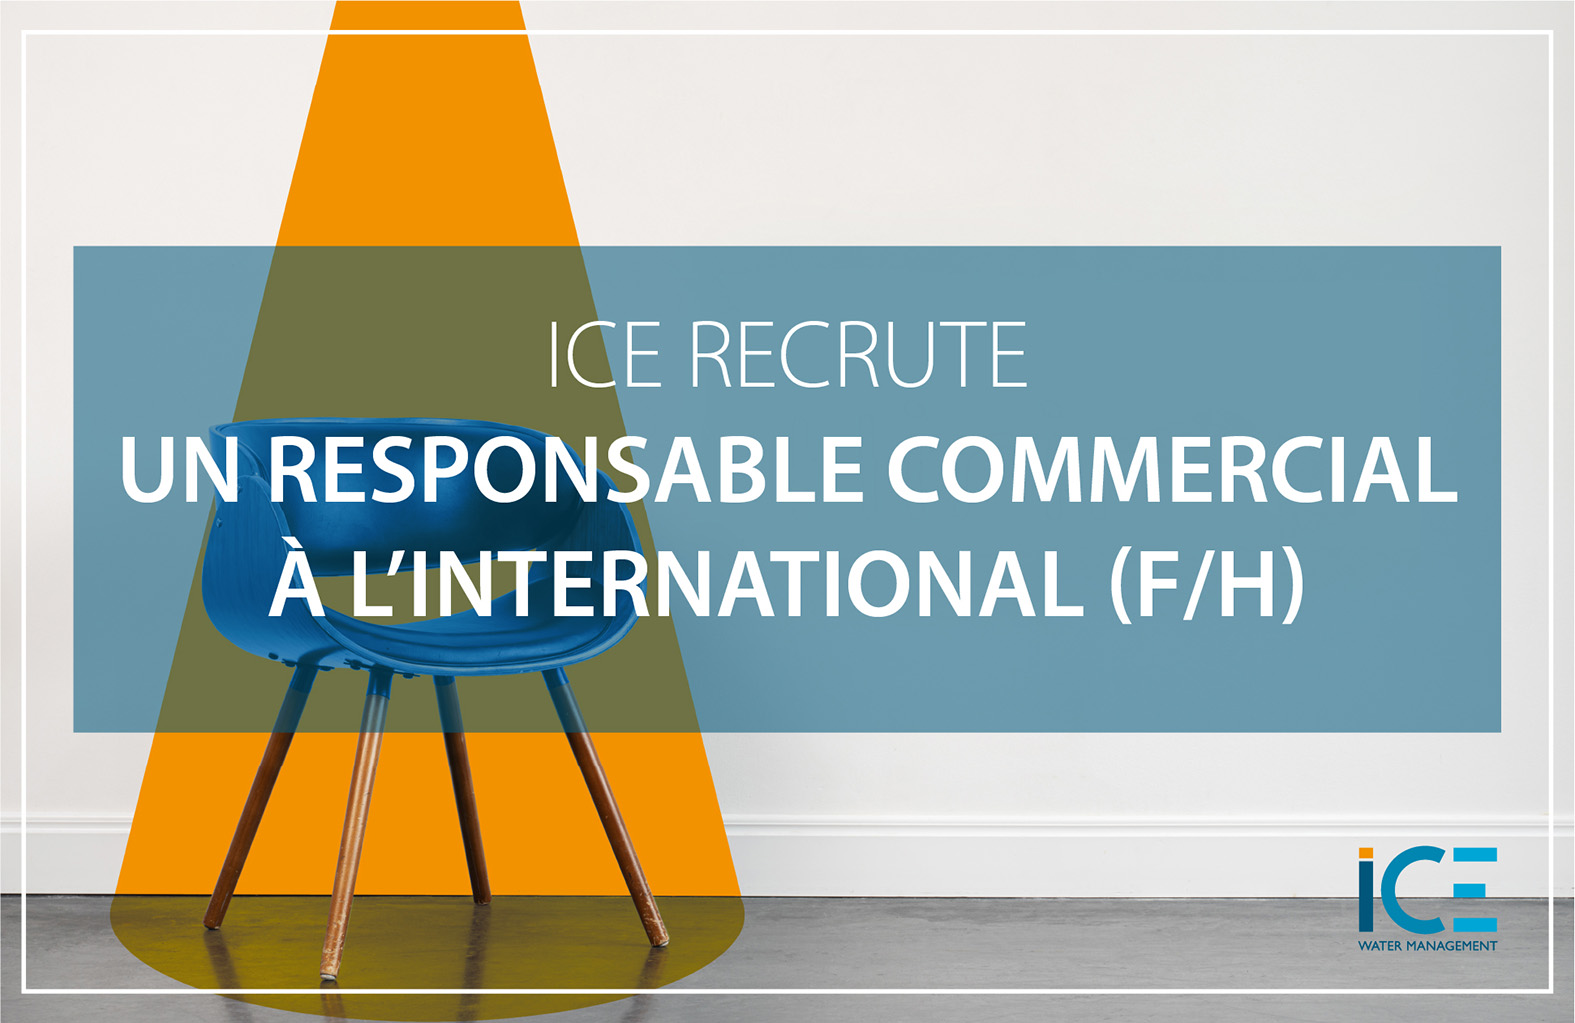 ICE recrute responsable commercial à l'international